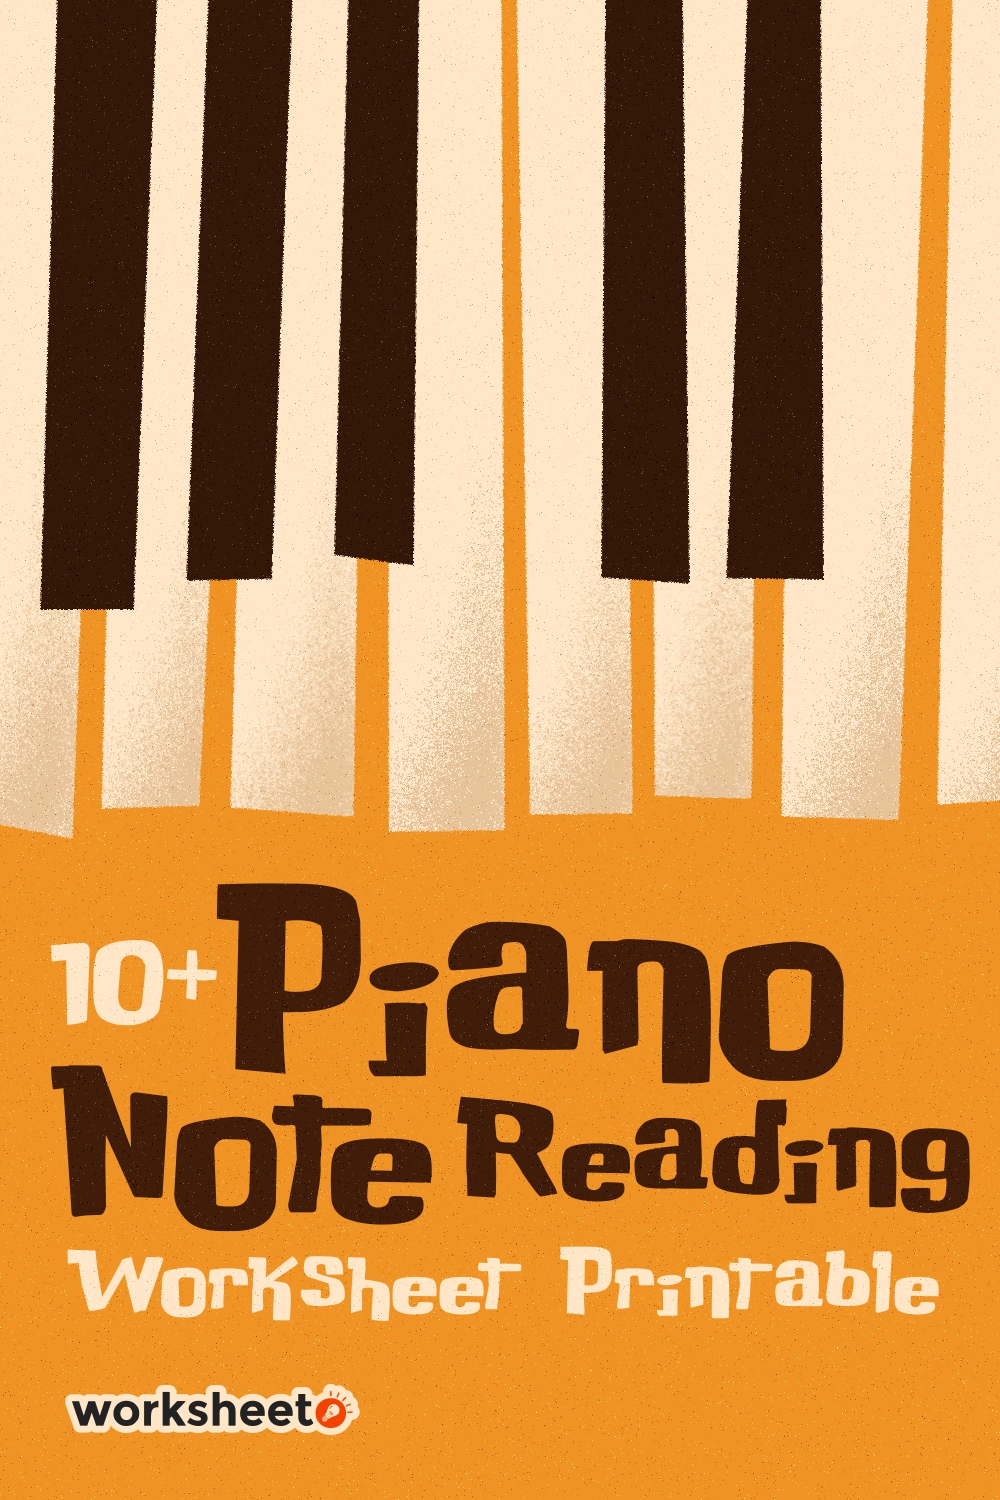 14-piano-note-reading-worksheets-printable-worksheeto